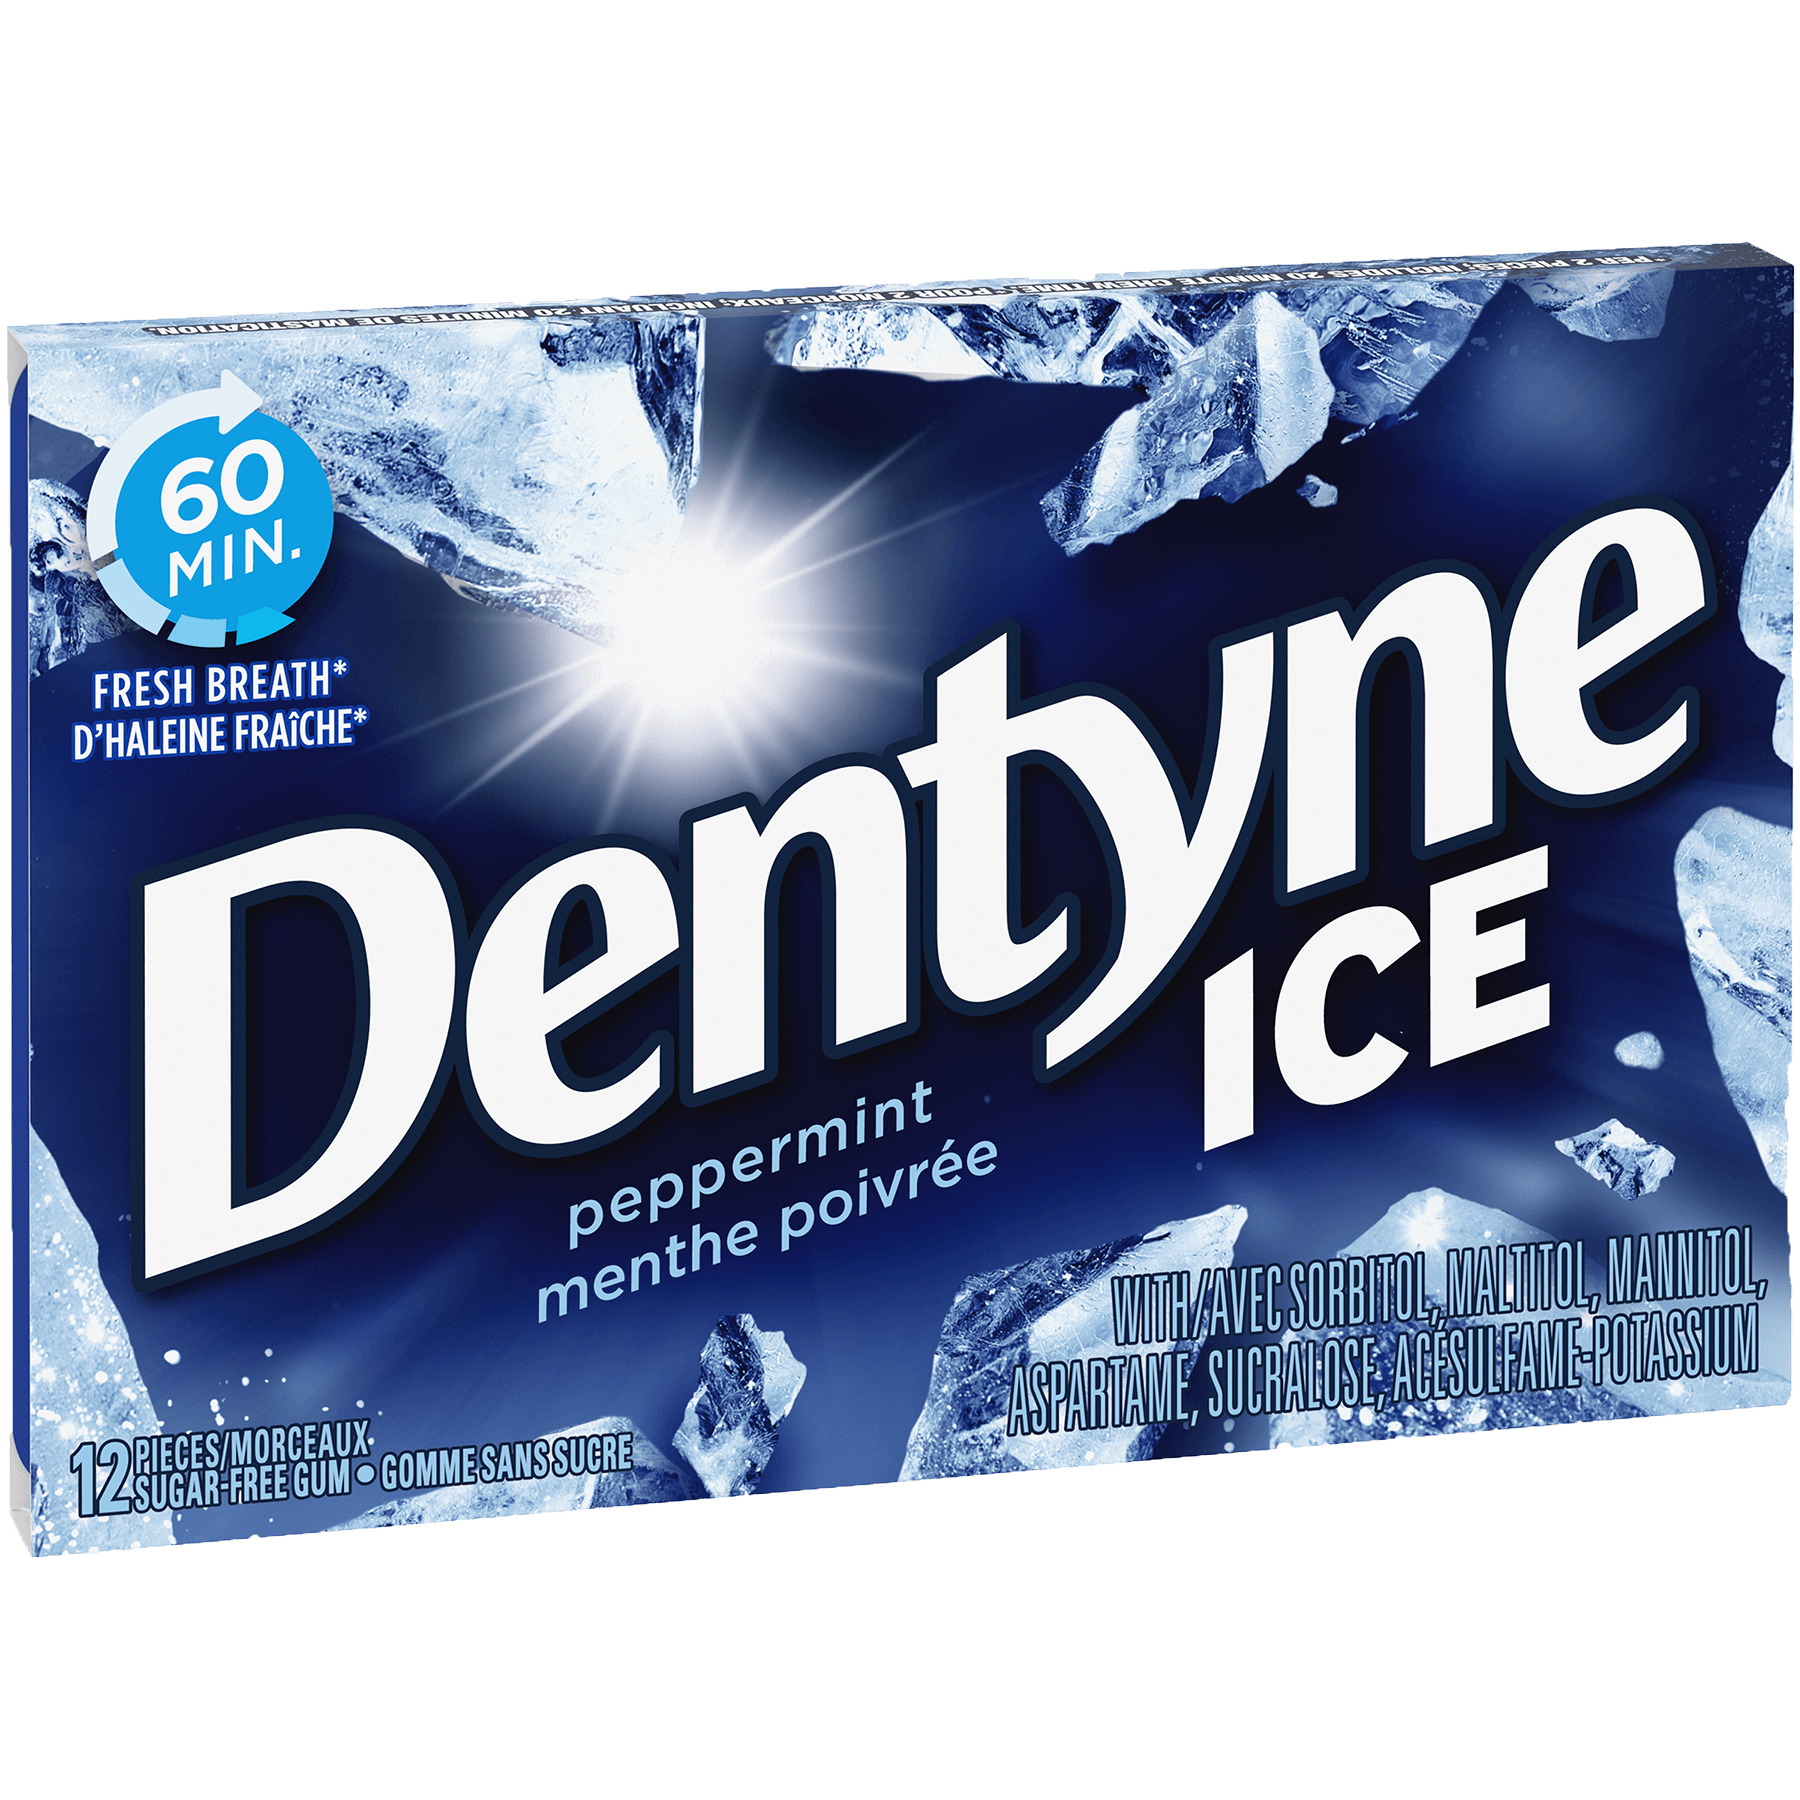 Dentyne ICE Menthe poivrée